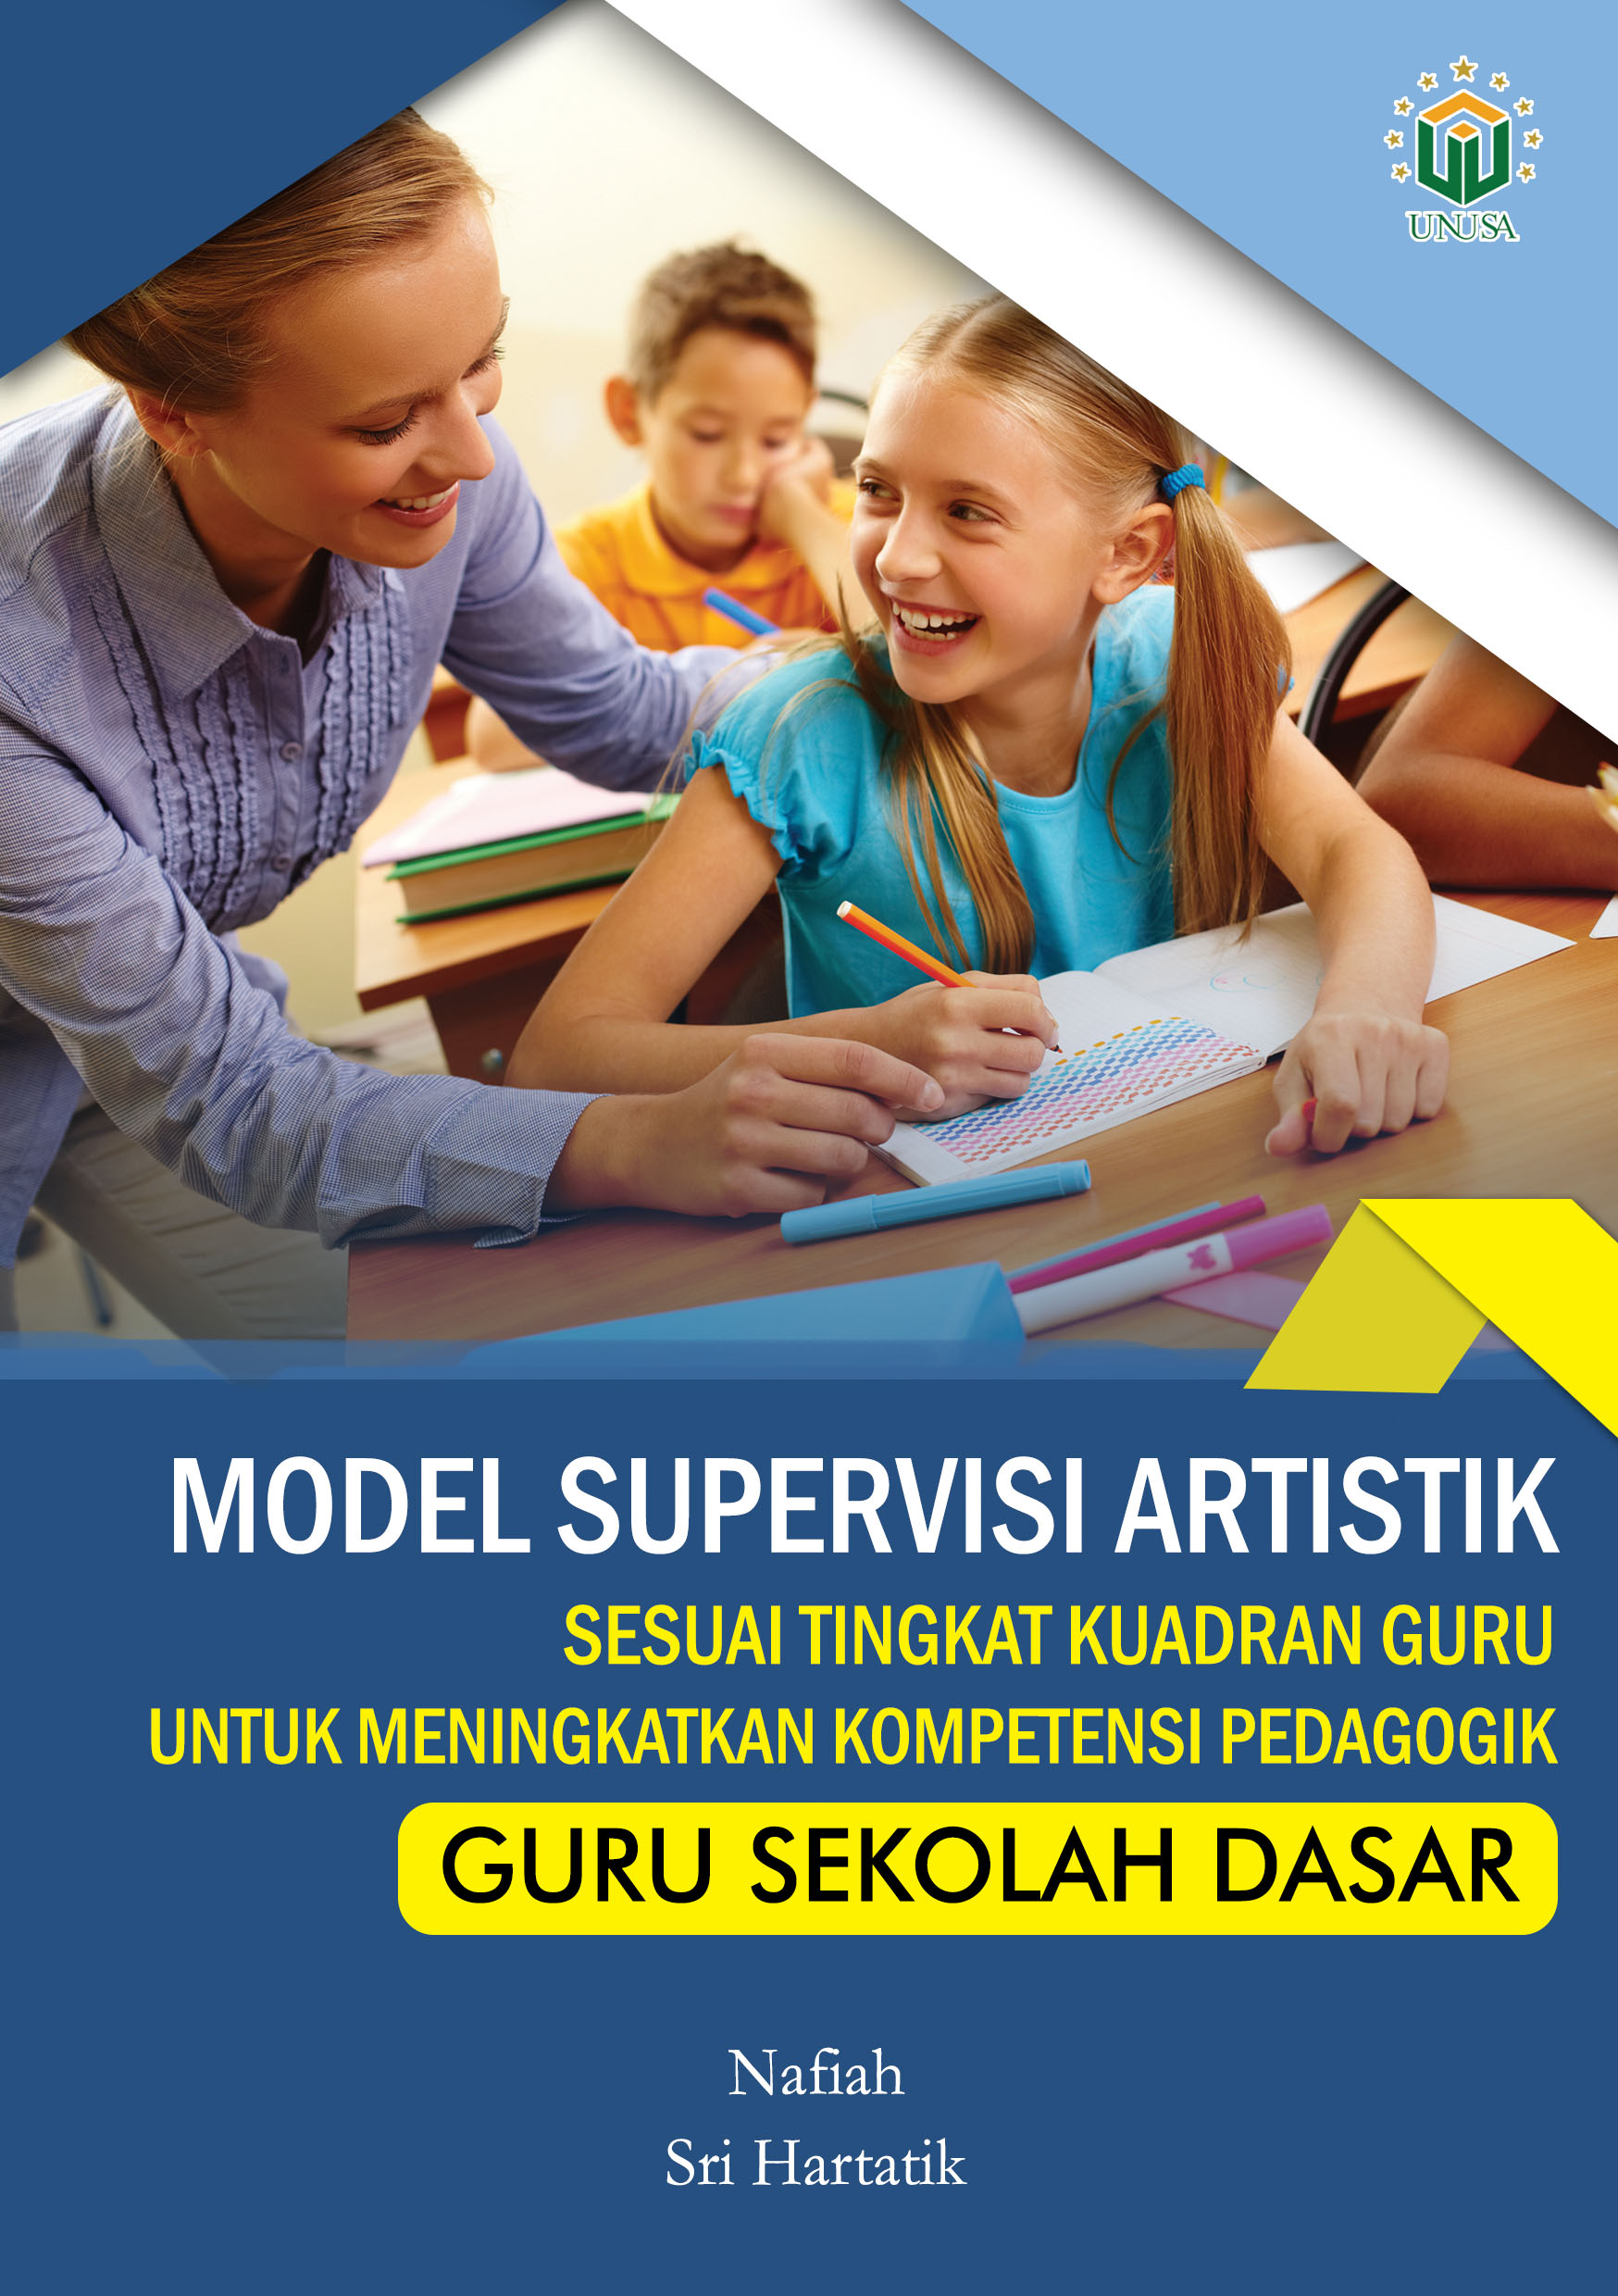 PDF) Kompetensi Guru Sekolah Minggu Terhadap Keefektifan Mengajar Anak:  Suatu Studi Kuantitatif Di Jemaat GPdI El-Shaddai Makassar